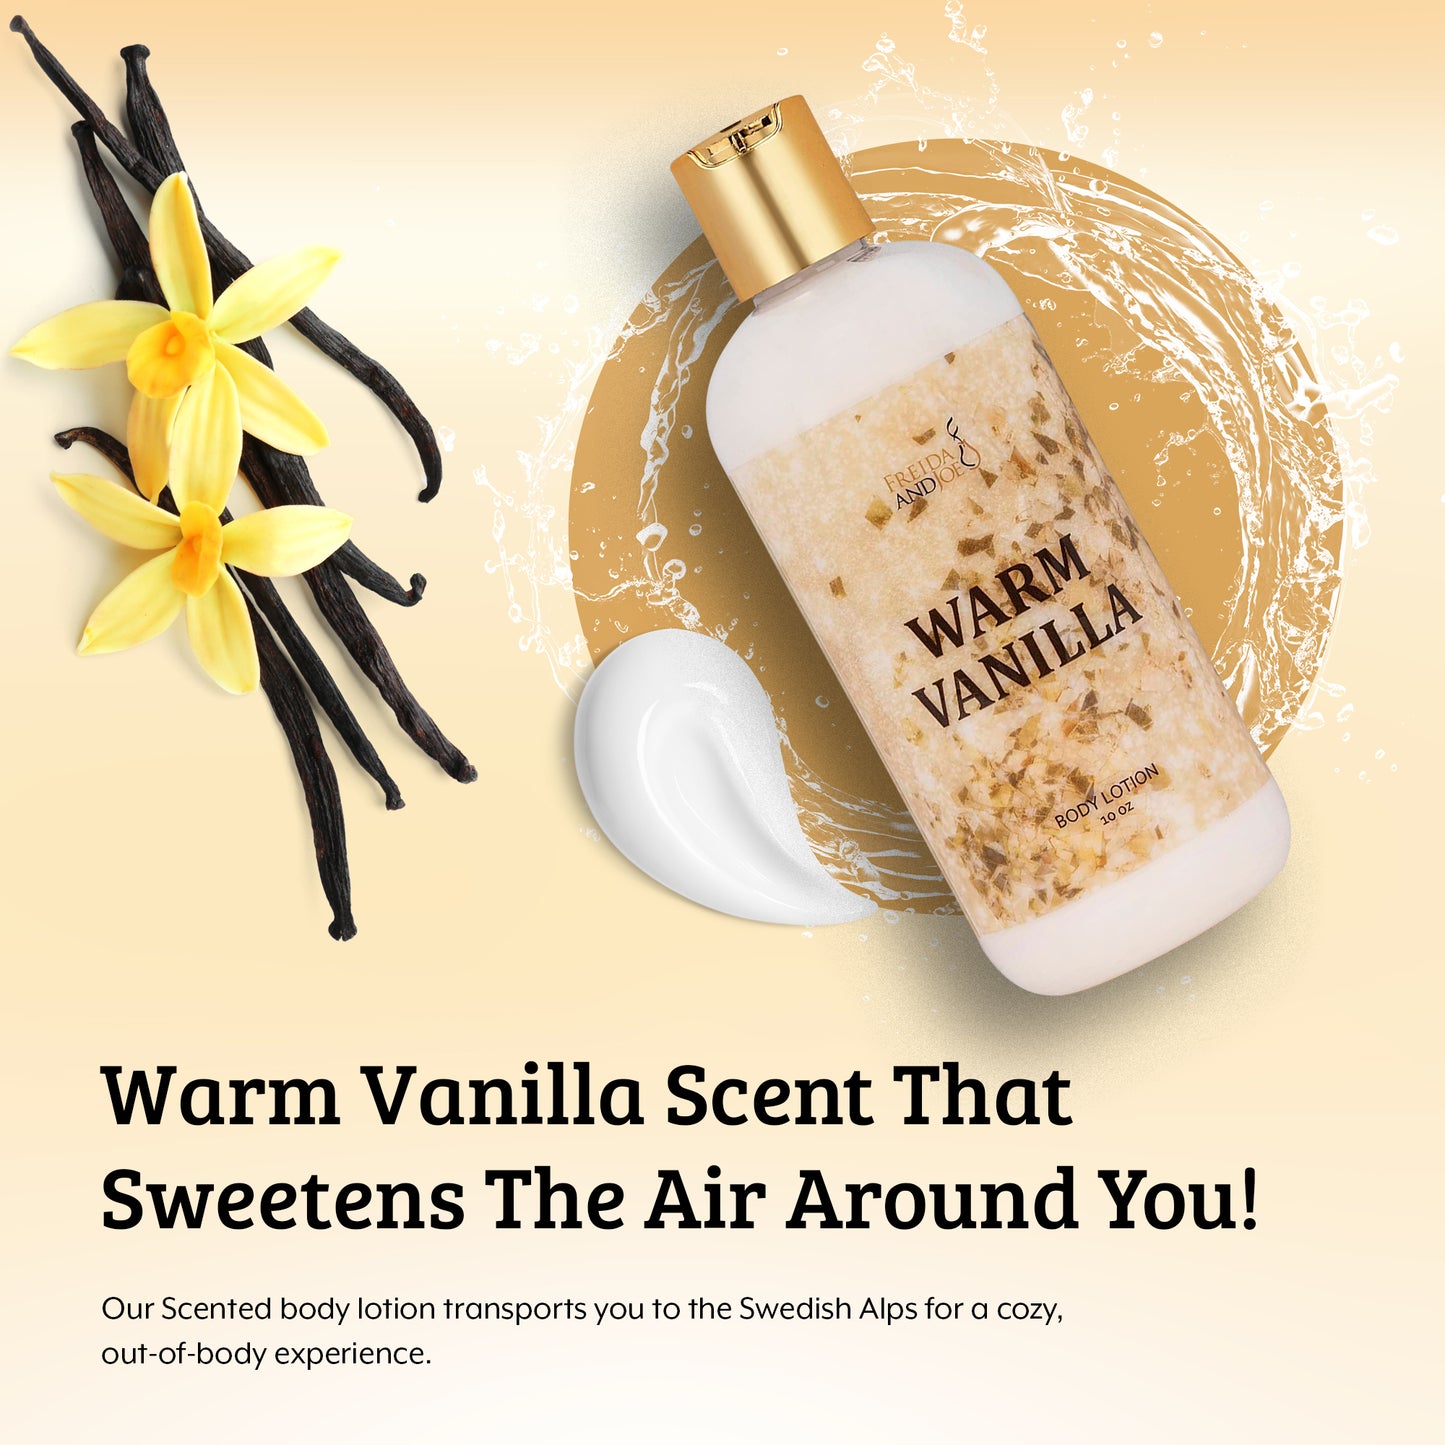 Warm Vanilla Fragrance Body Lotion in 10oz Bottle